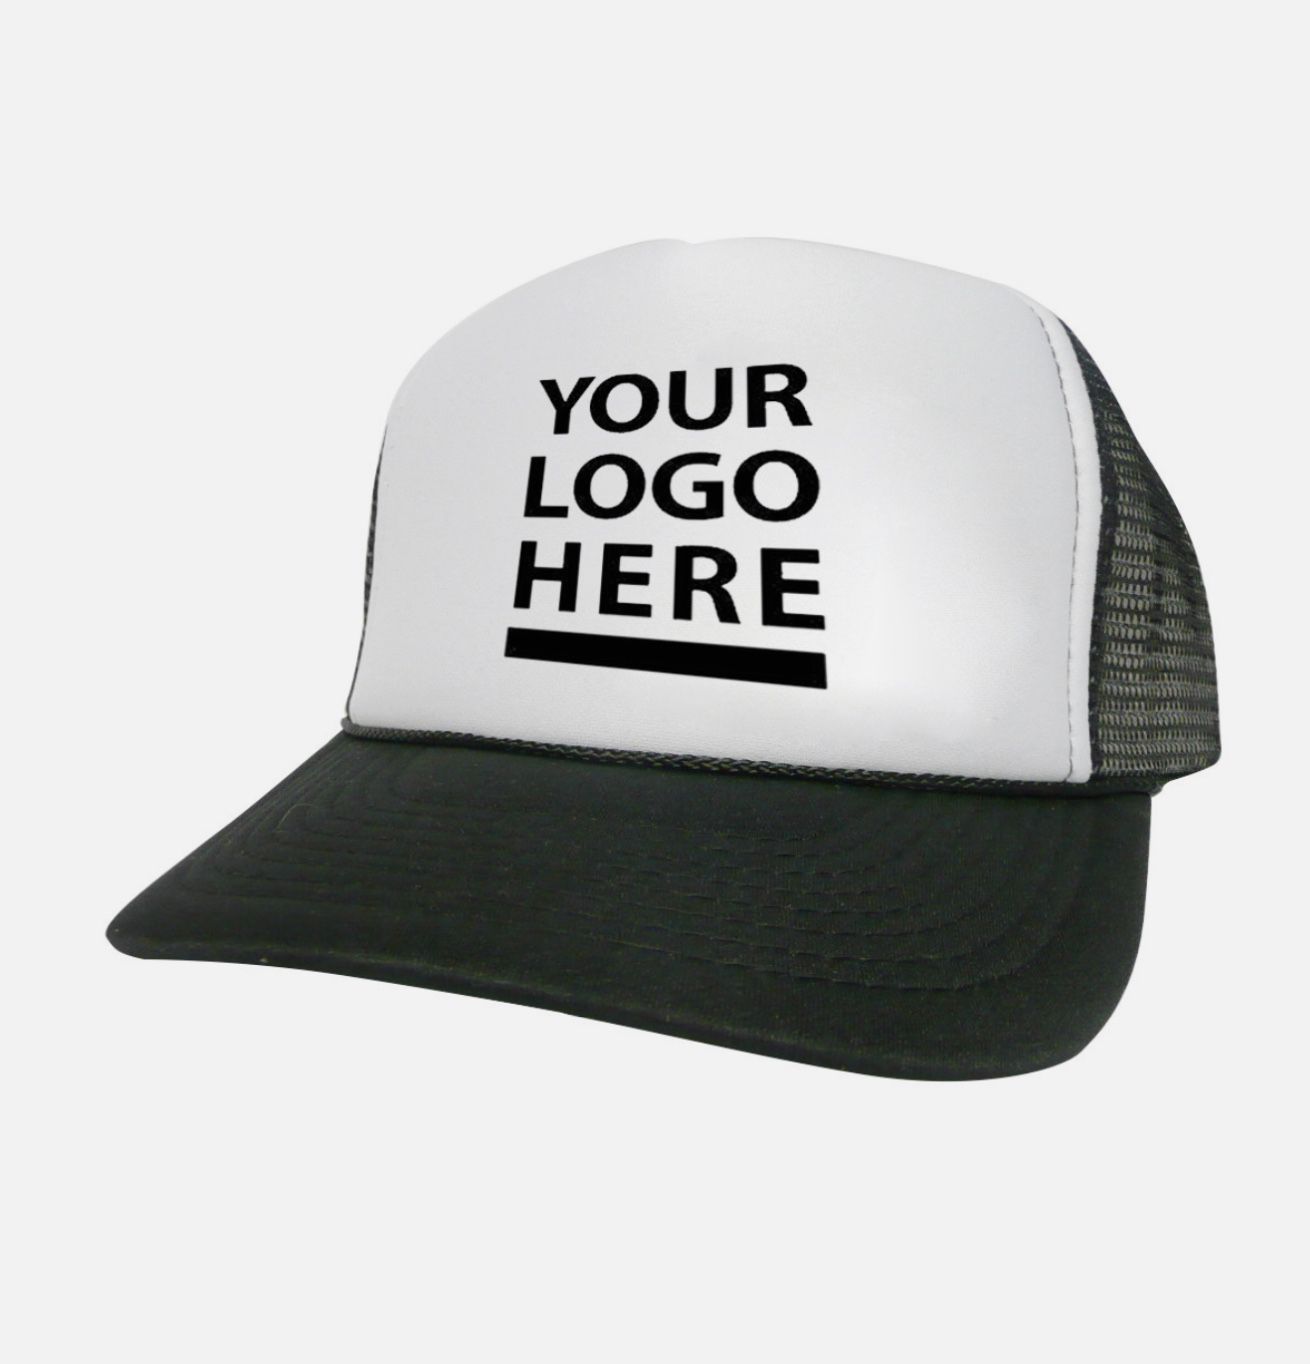 Hats, Shirts Printing Custom